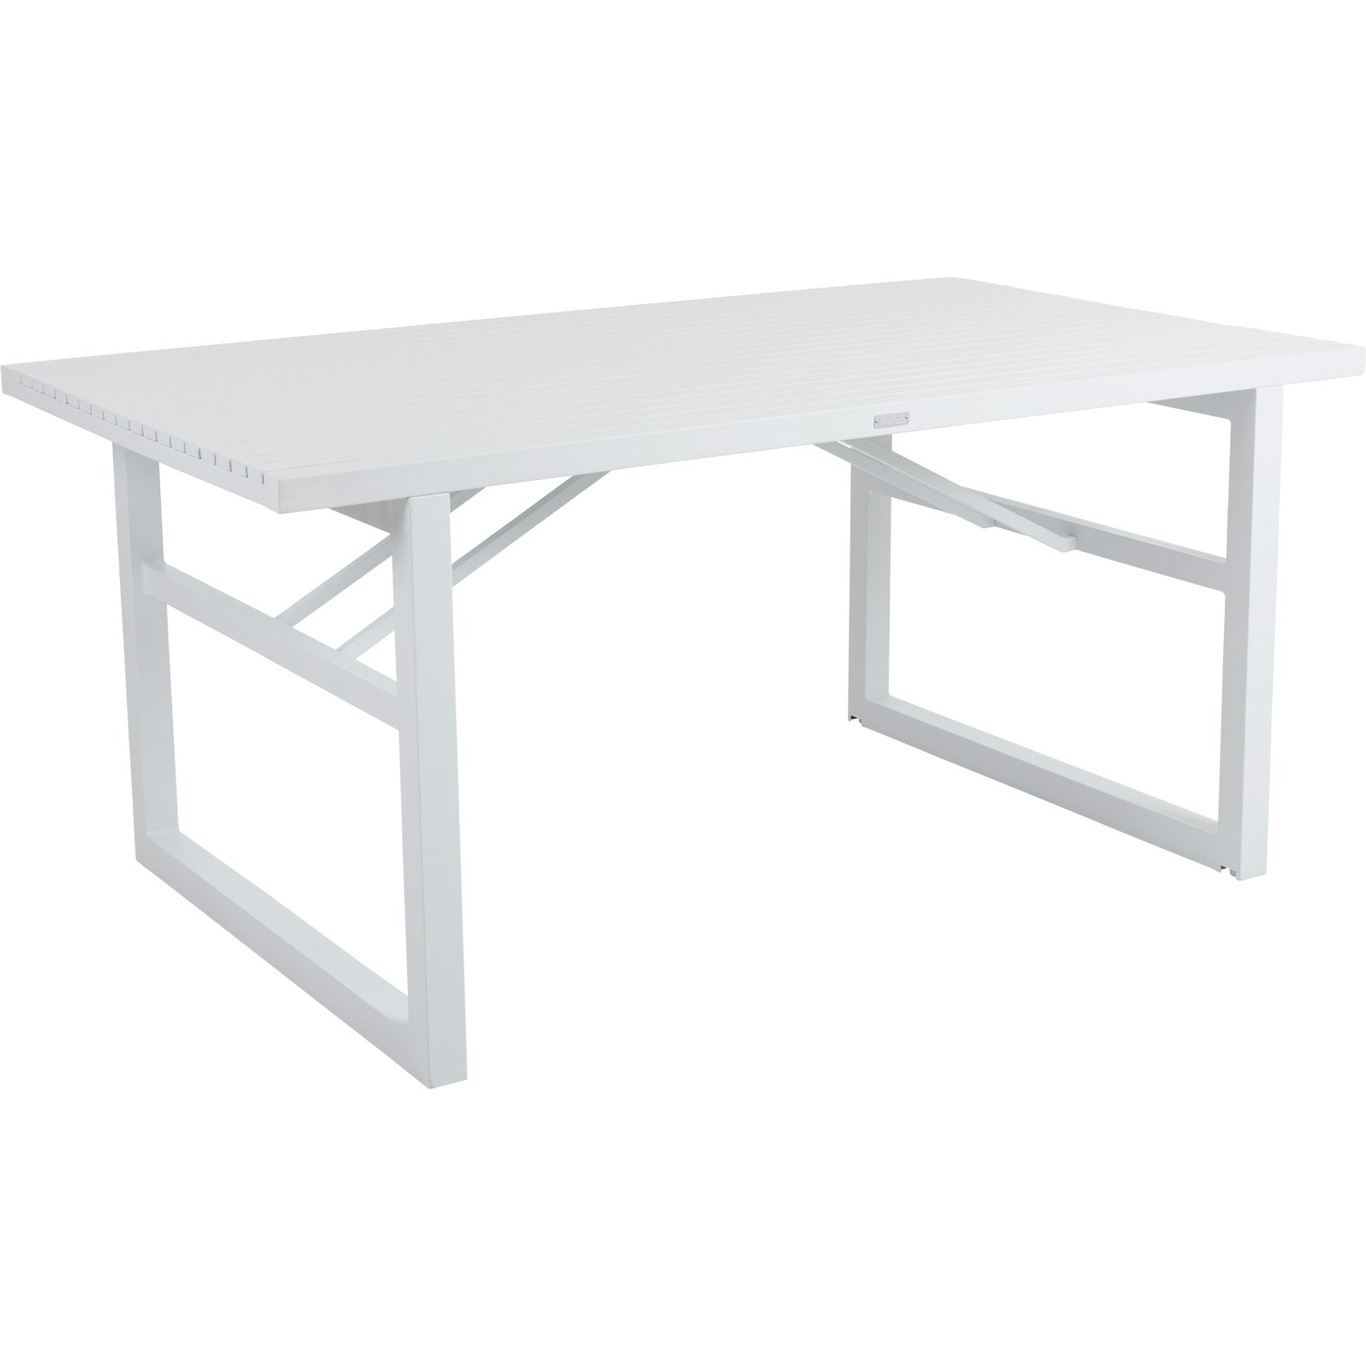 Vevi Dining Table, White 160x90 cm Aluminium, White